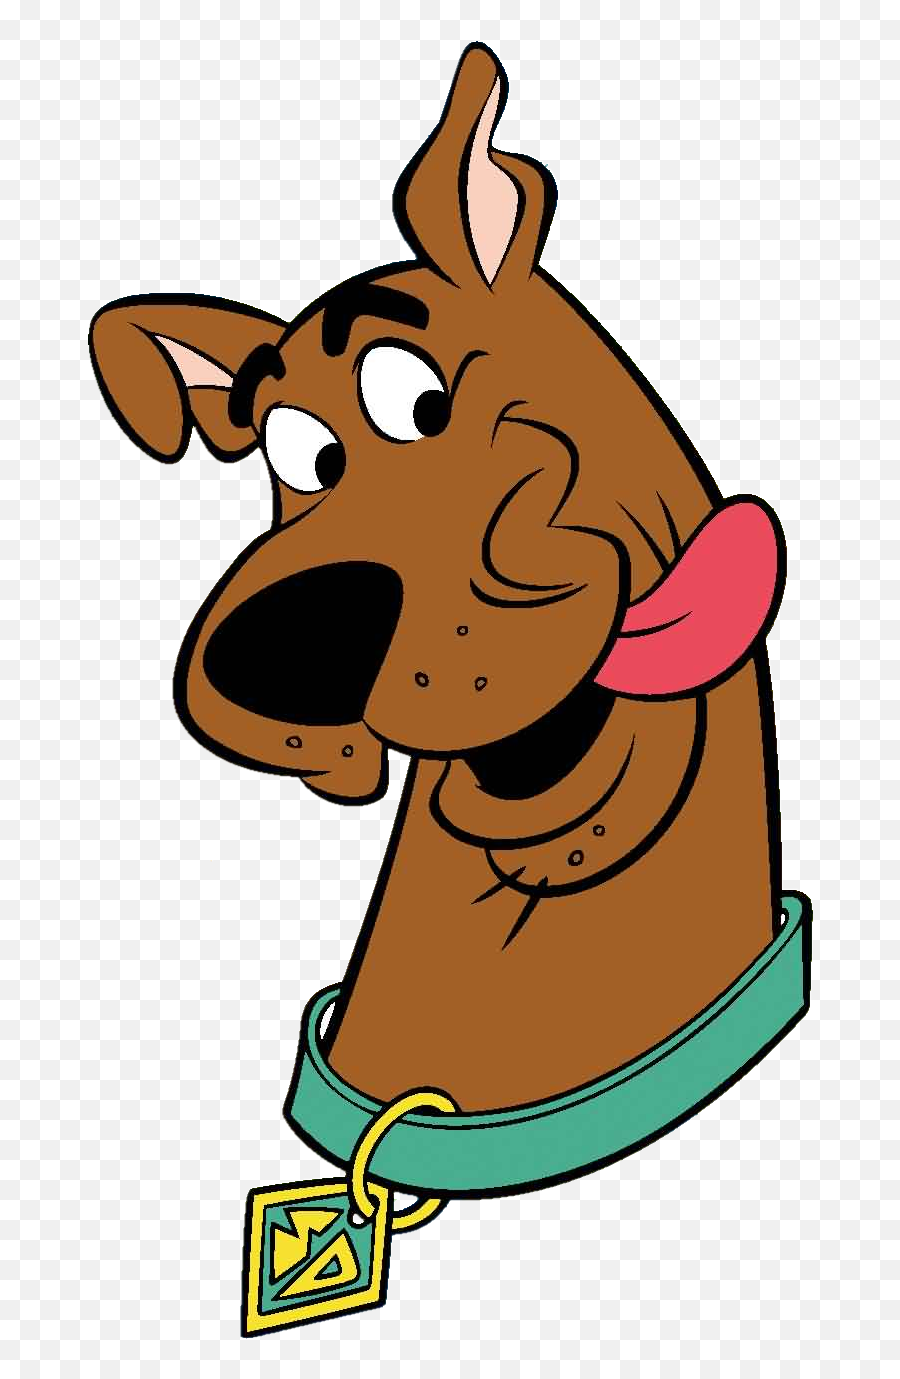 Scooby Doo Png 6 Image - Character Scooby Doo Cartoon,Scooby Doo Png